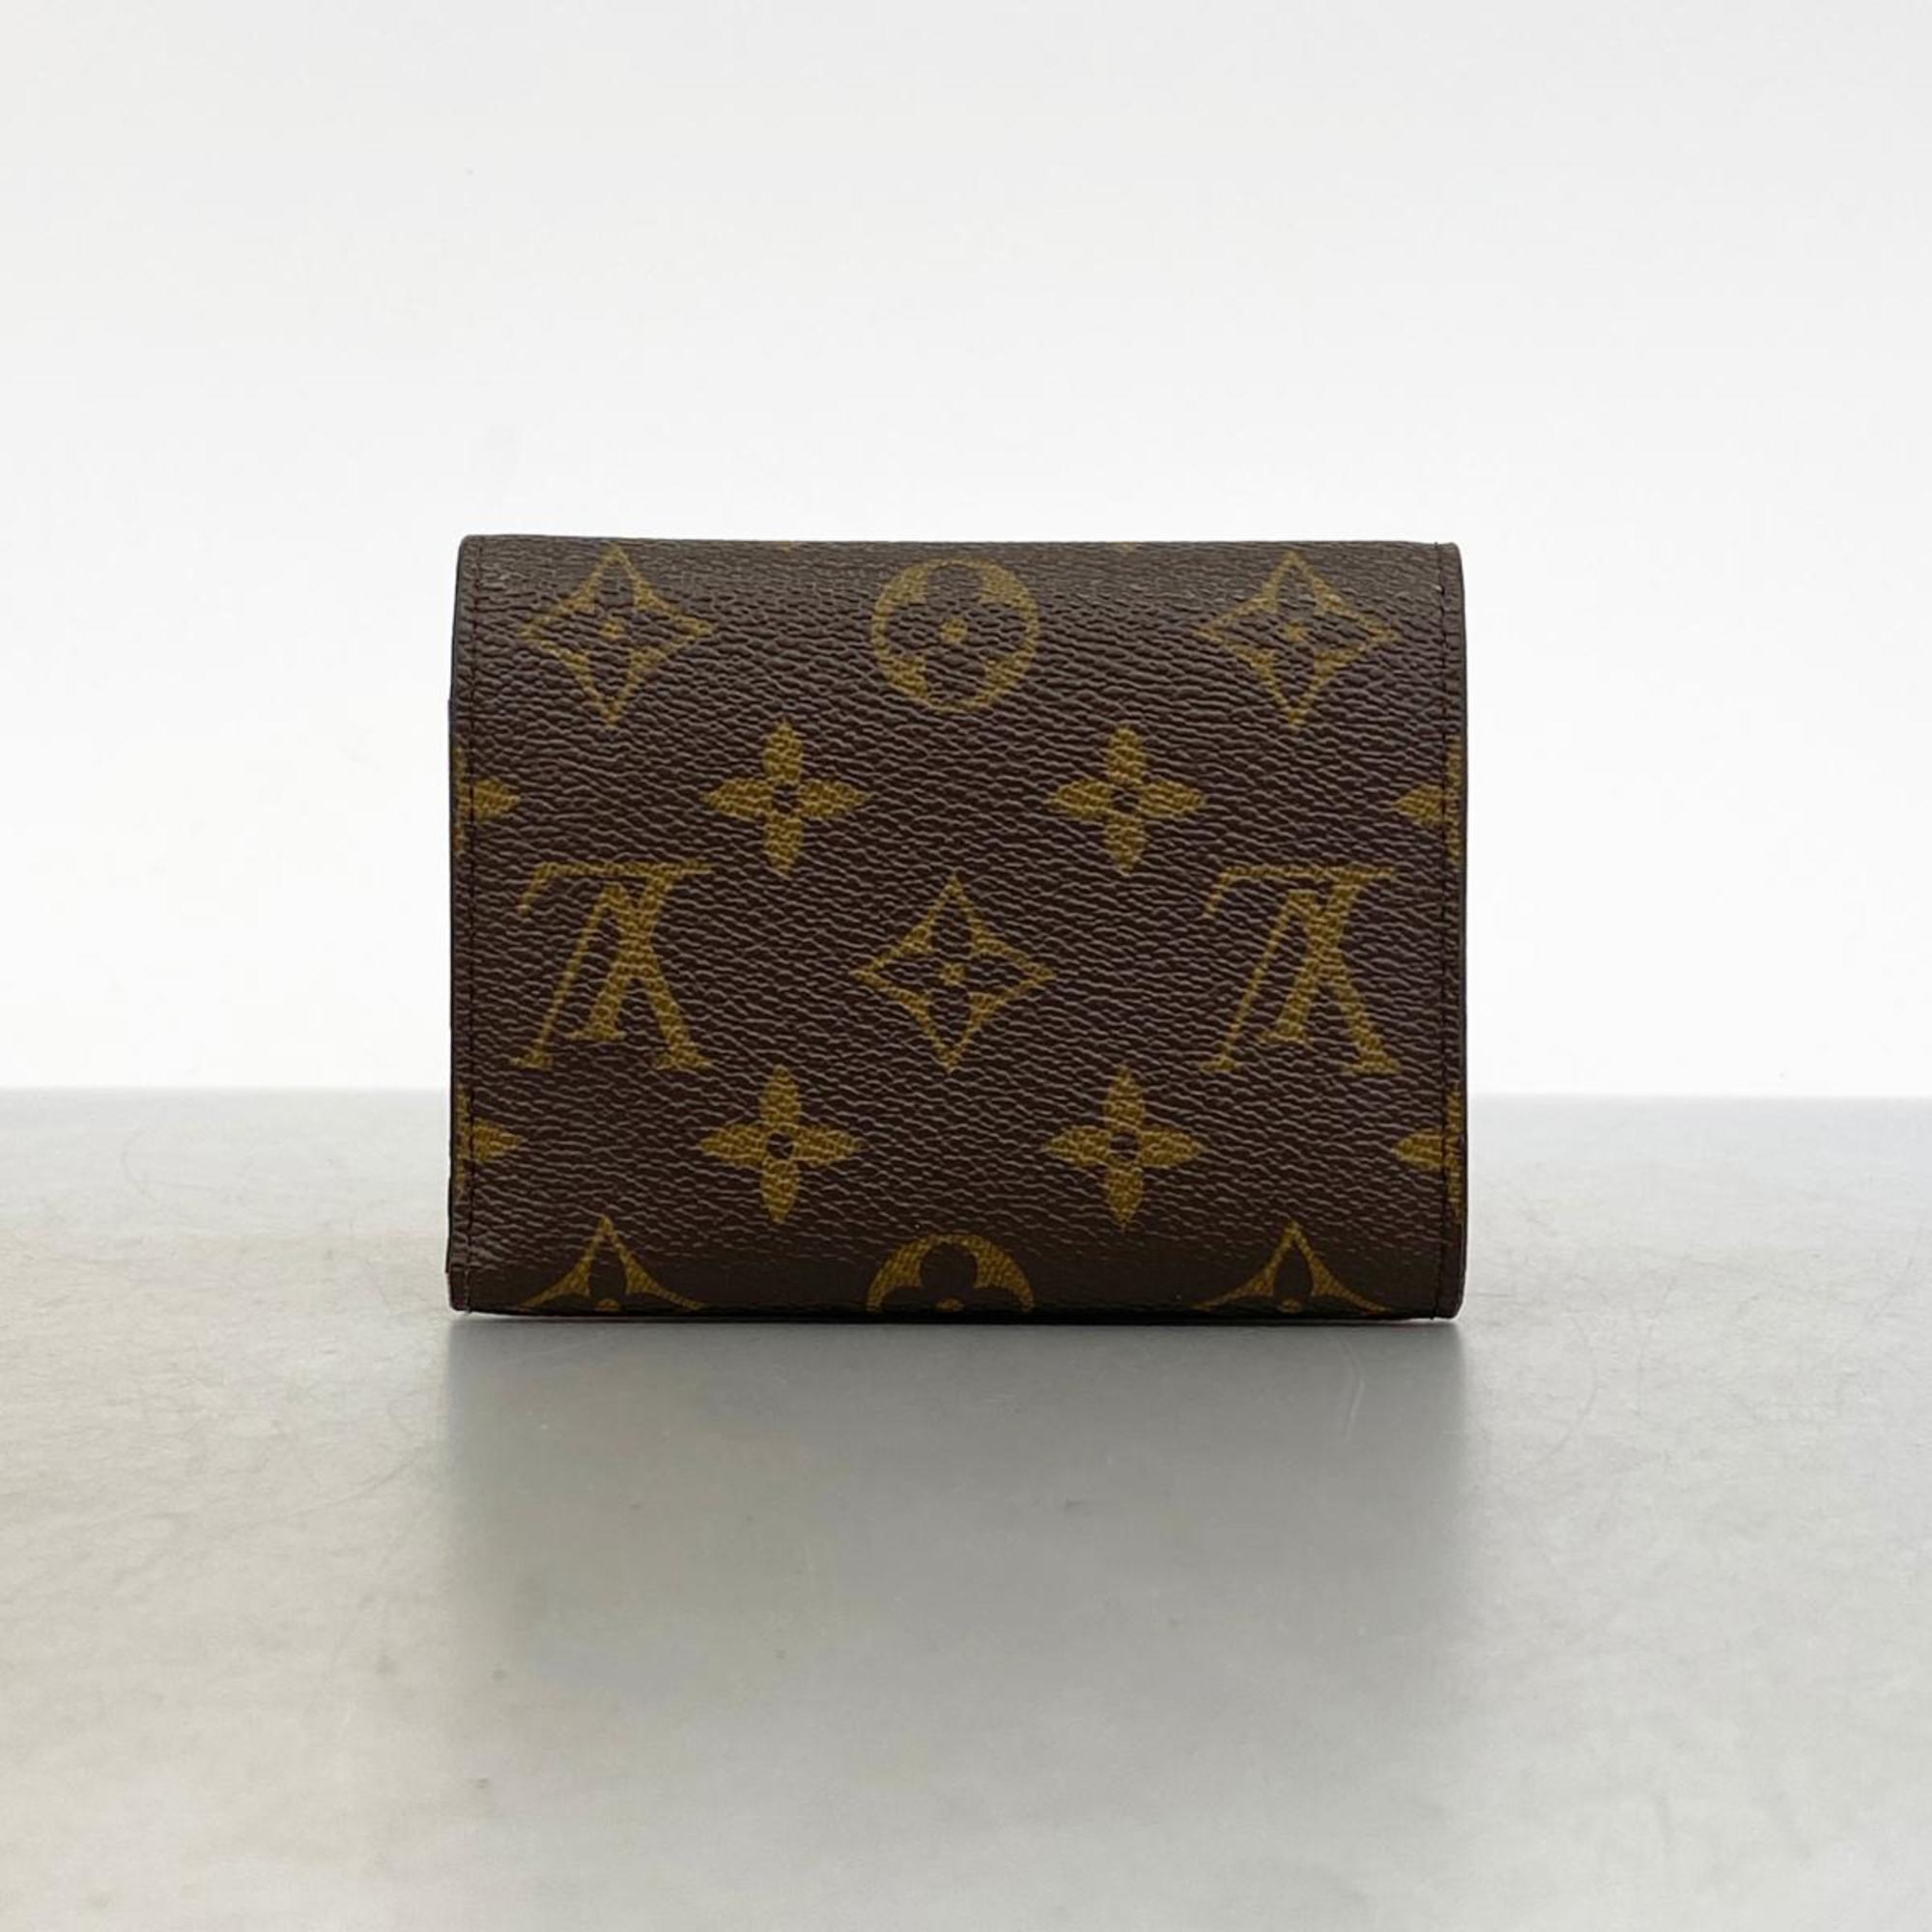 Louis Vuitton Tri-fold Wallet Monogram Portefeuille Victorine M62472 Brown Women's